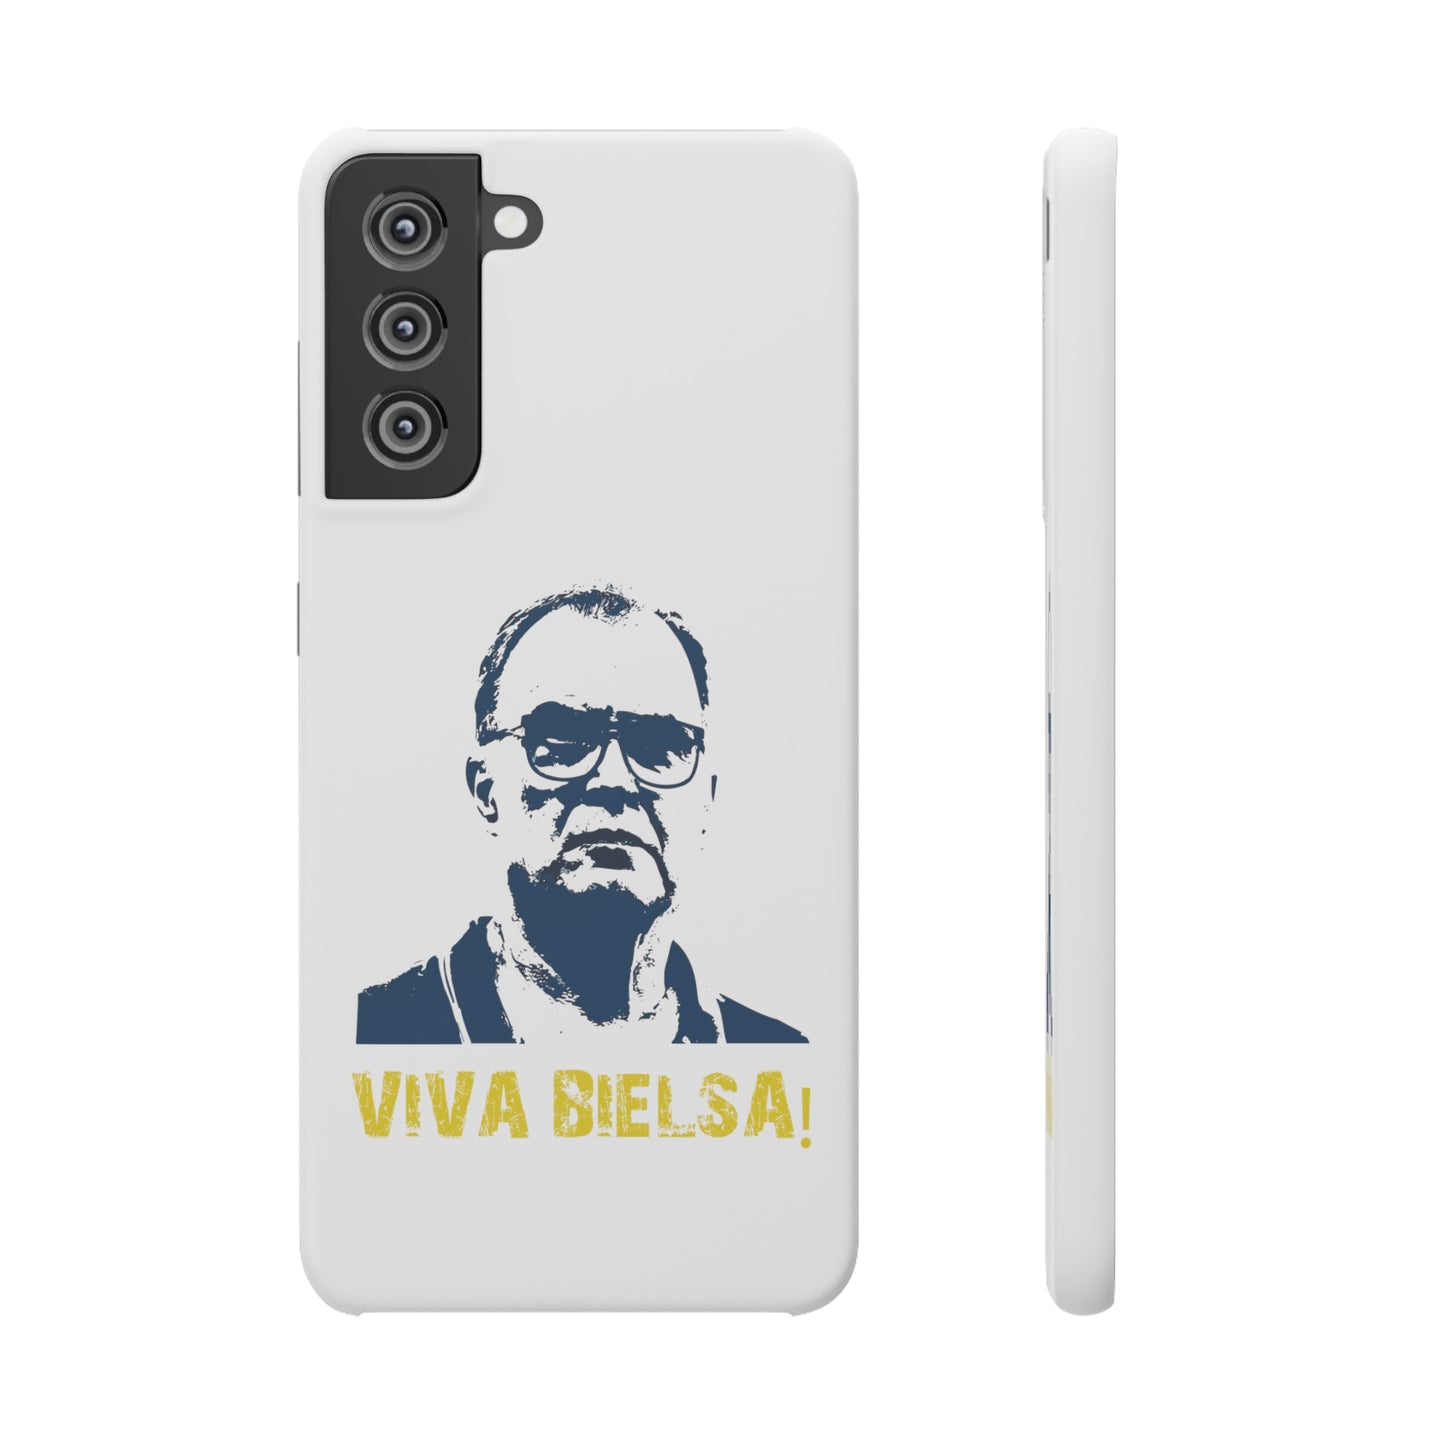 Snap Case - Viva Bielsa!